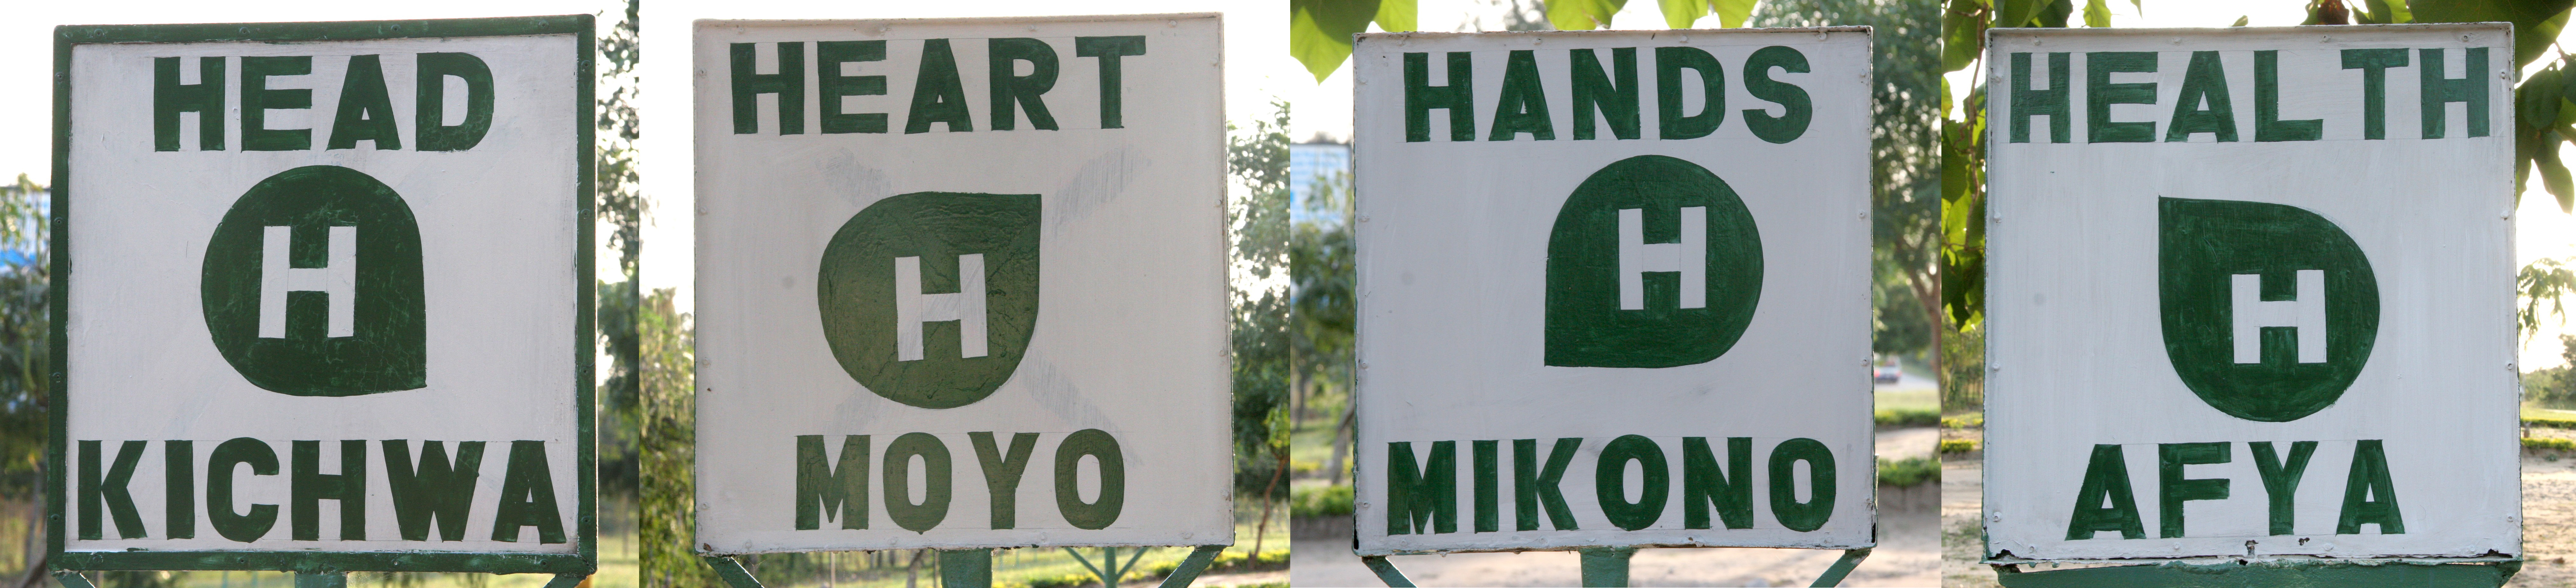 4-H motto Tanzania